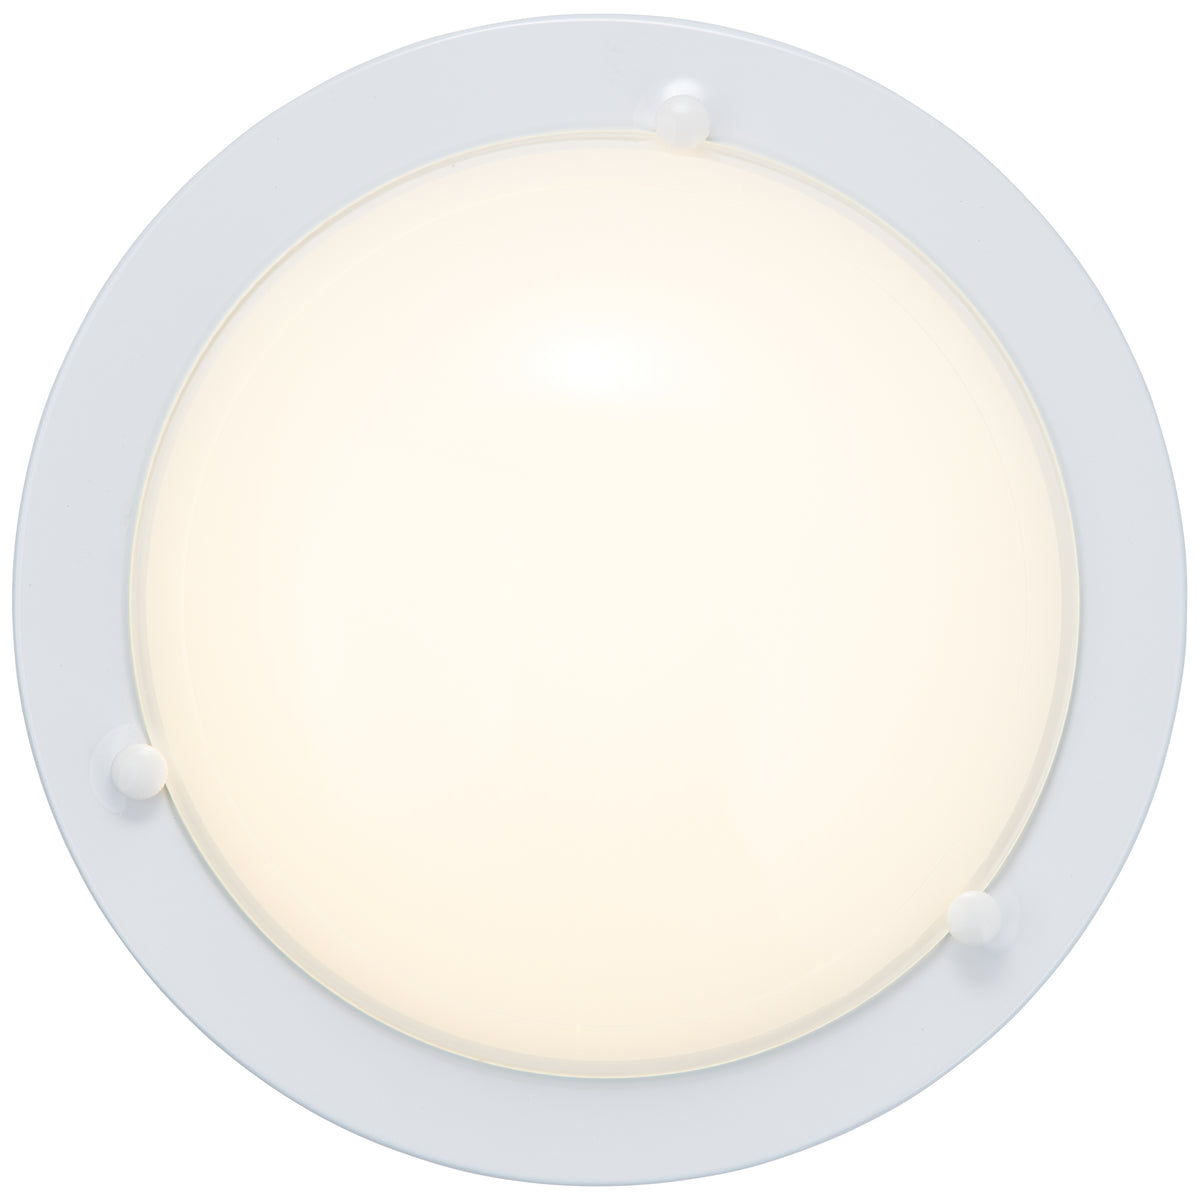 Baseline plafondlamp Bale wit ⌀28cm 12W